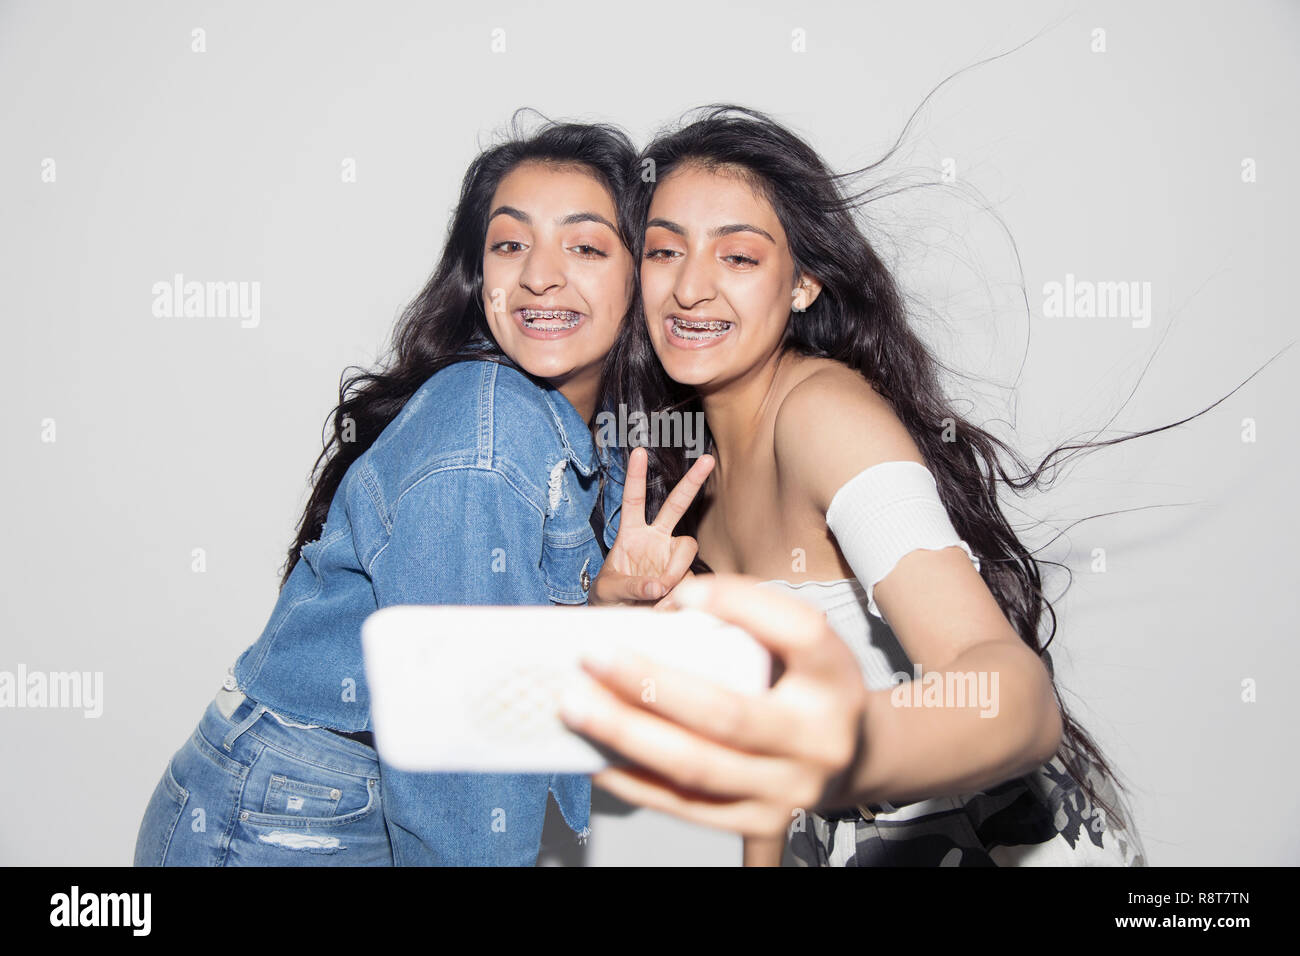 Carefree teenage gemelle con bretelle tenendo selfie con smart phone Foto Stock